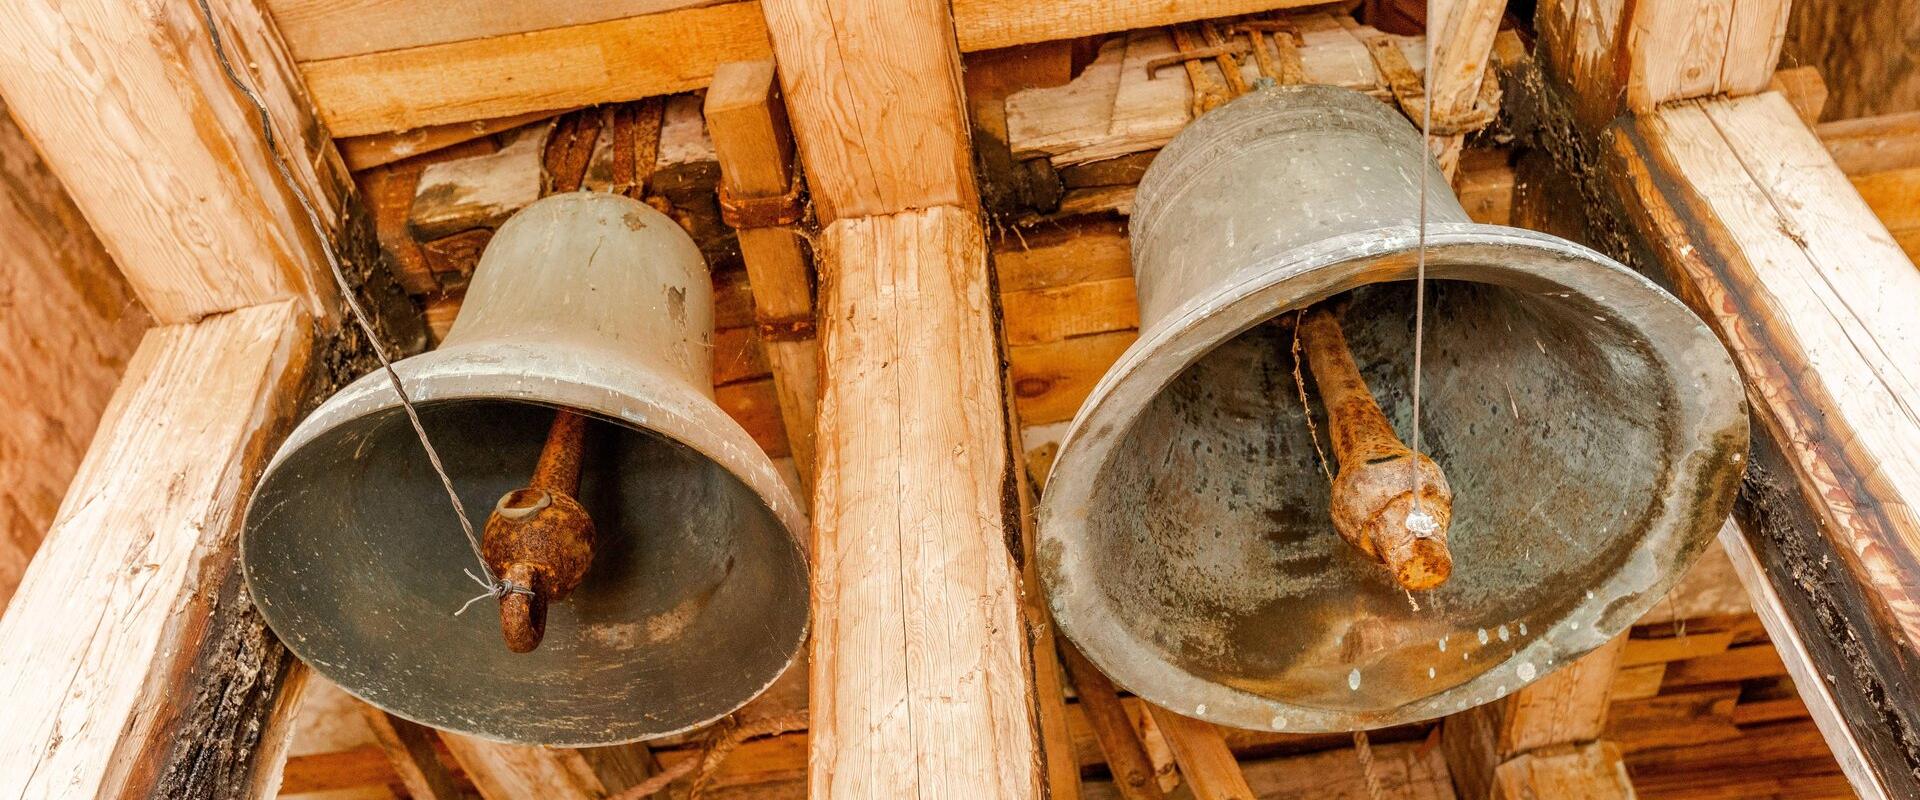 Church bells of the St John’s Lutheran Church in Haapsalu